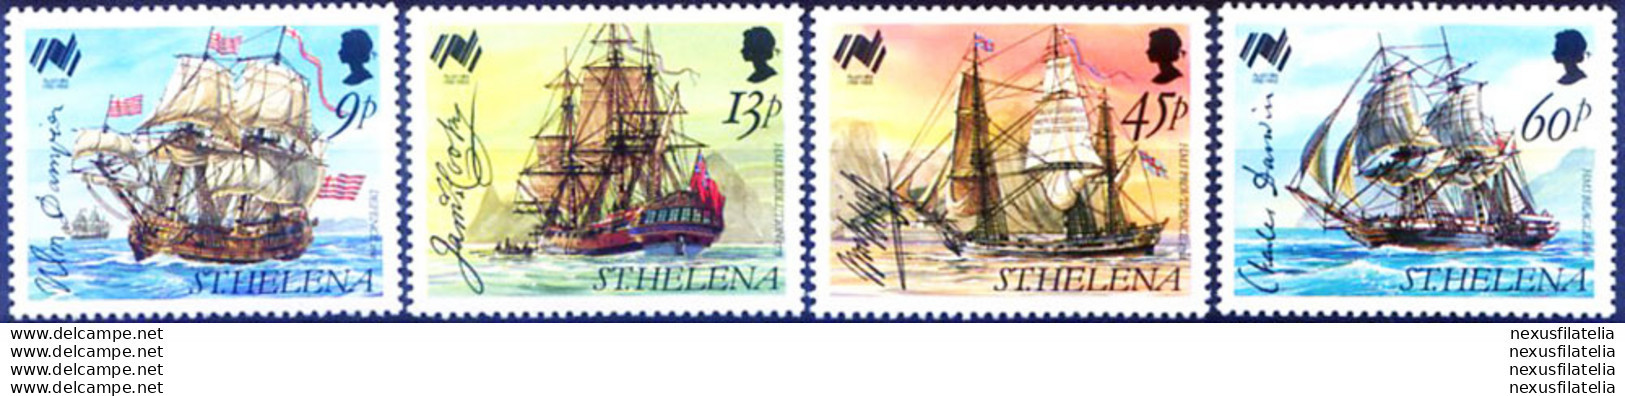 Velieri 1988. - Isla Sta Helena